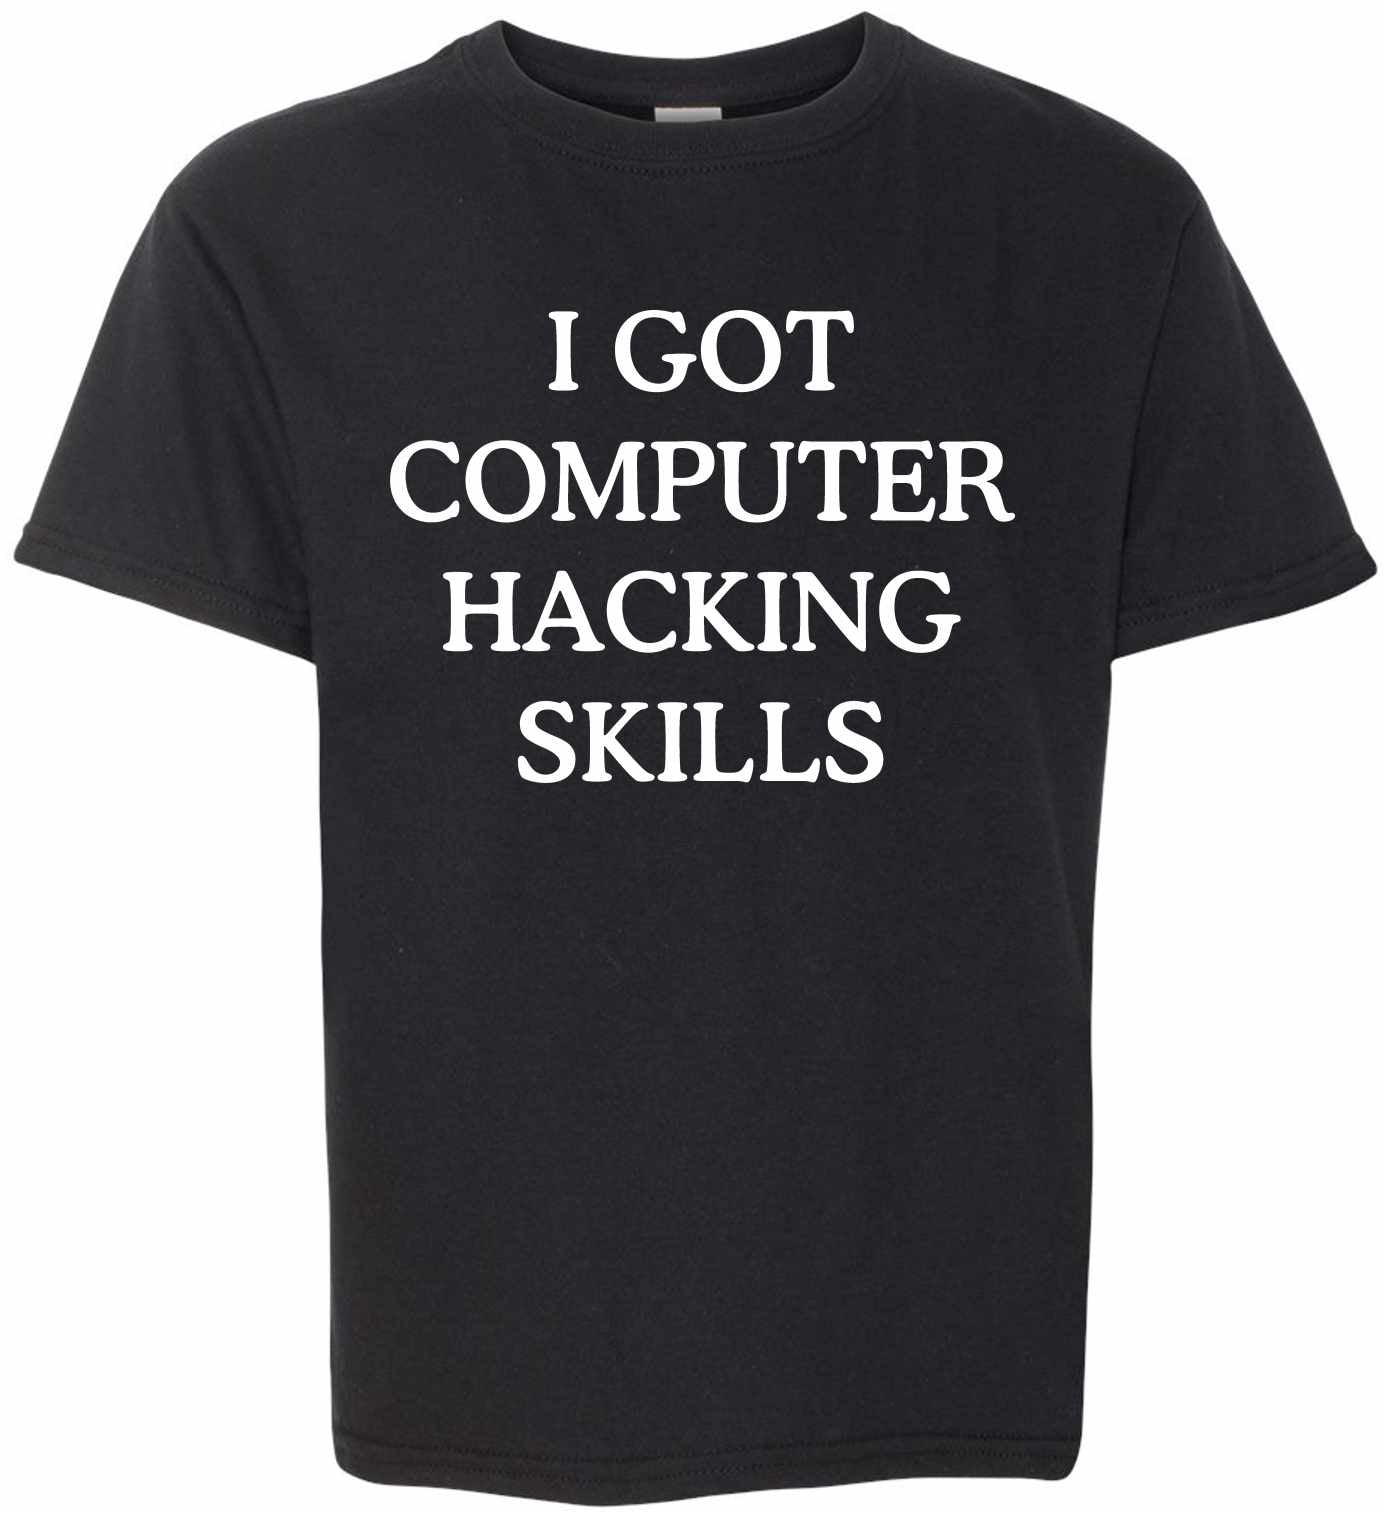 I GOT COMPUTER HACKING SKILLS on Kids T-Shirt